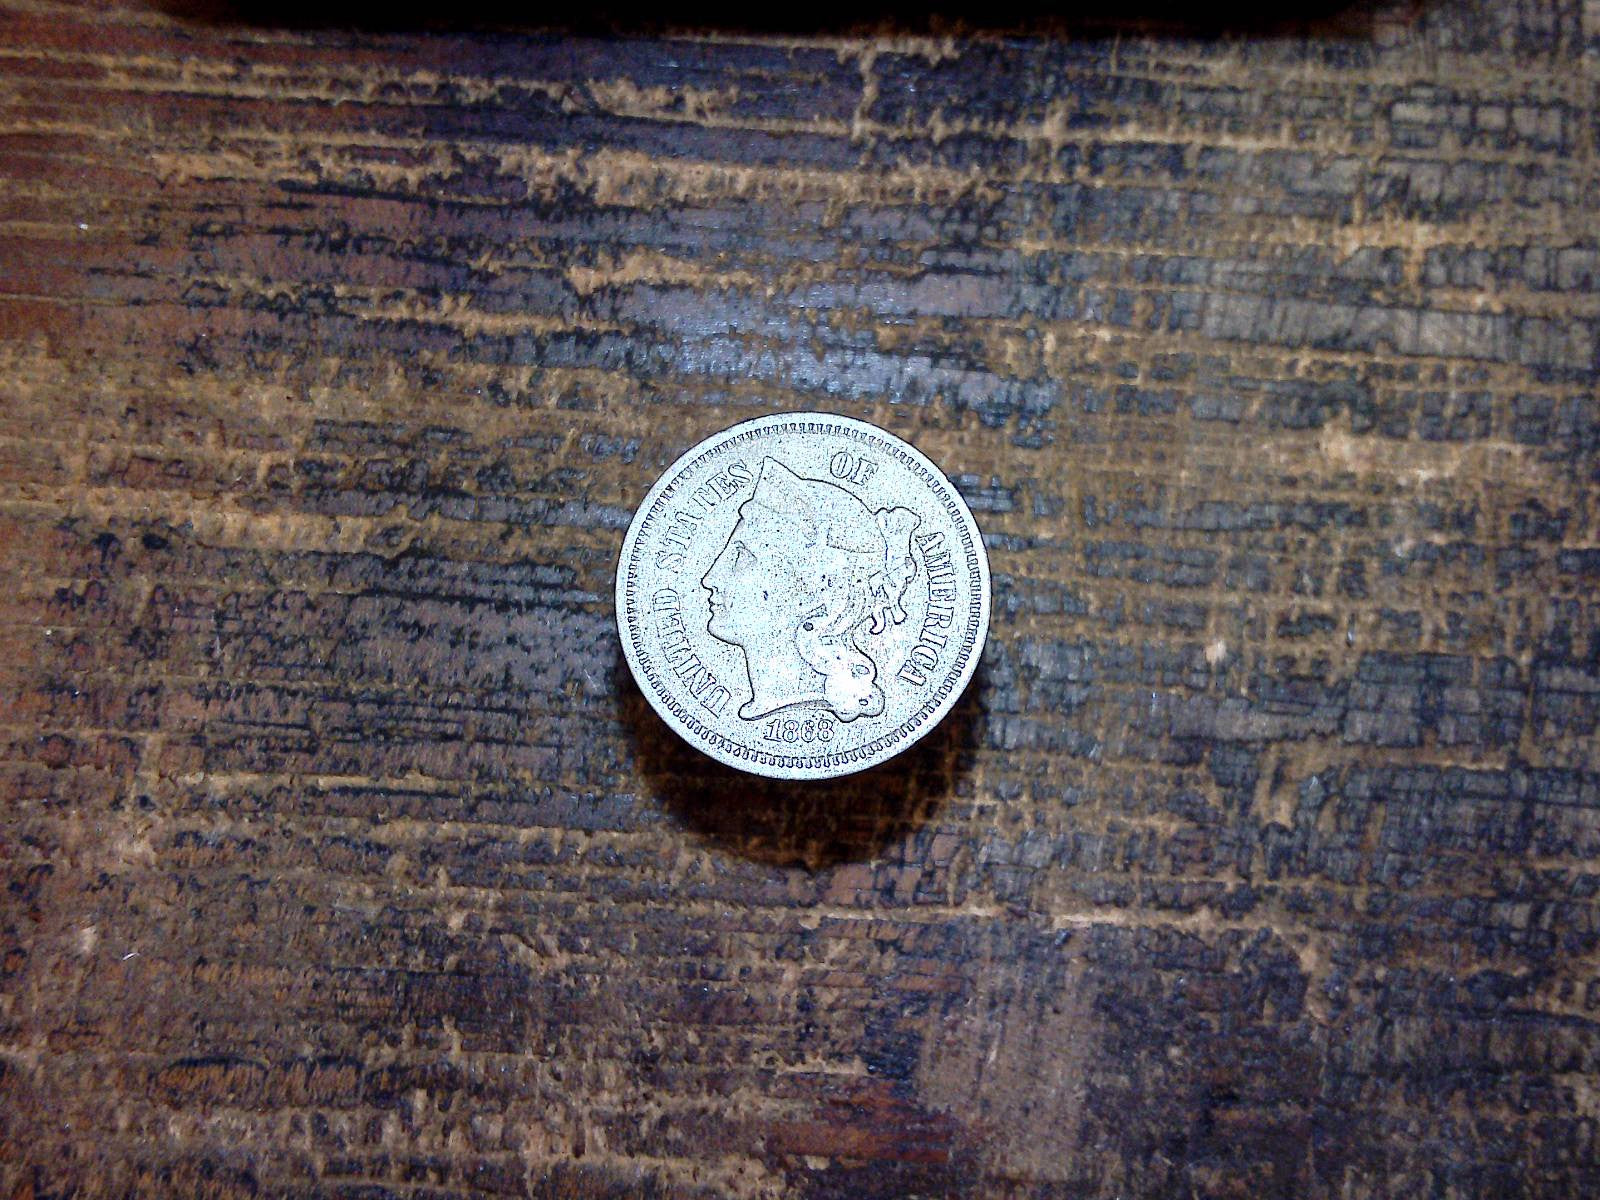 1868 3c US Three Cent Nickel